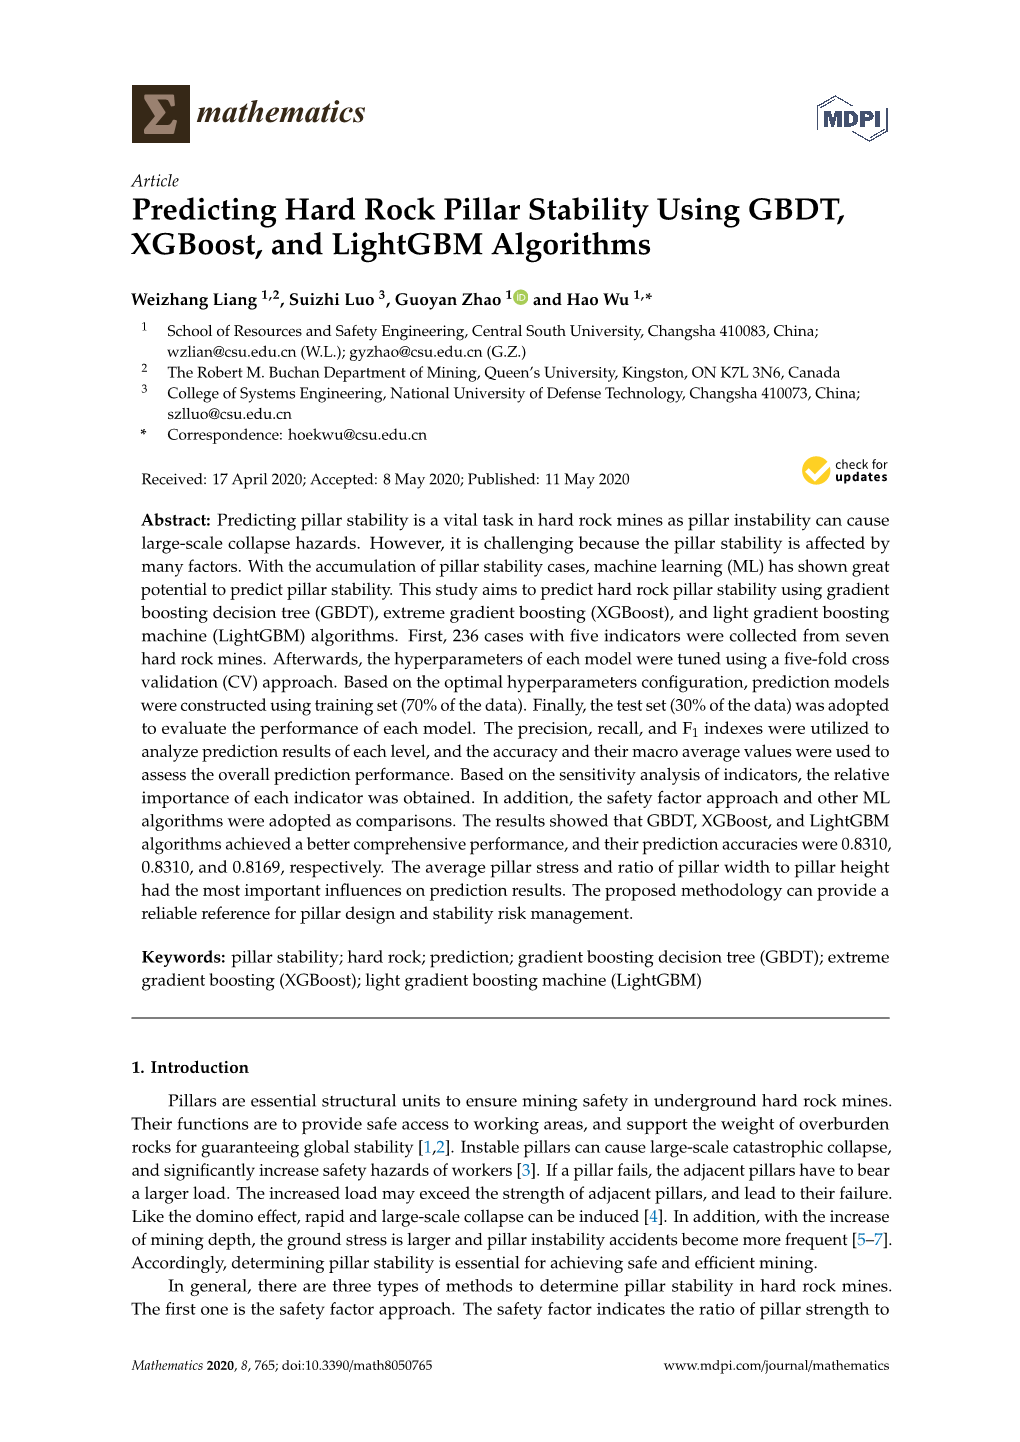 Predicting Hard Rock Pillar Stability Using GBDT, Xgboost, and Lightgbm Algorithms